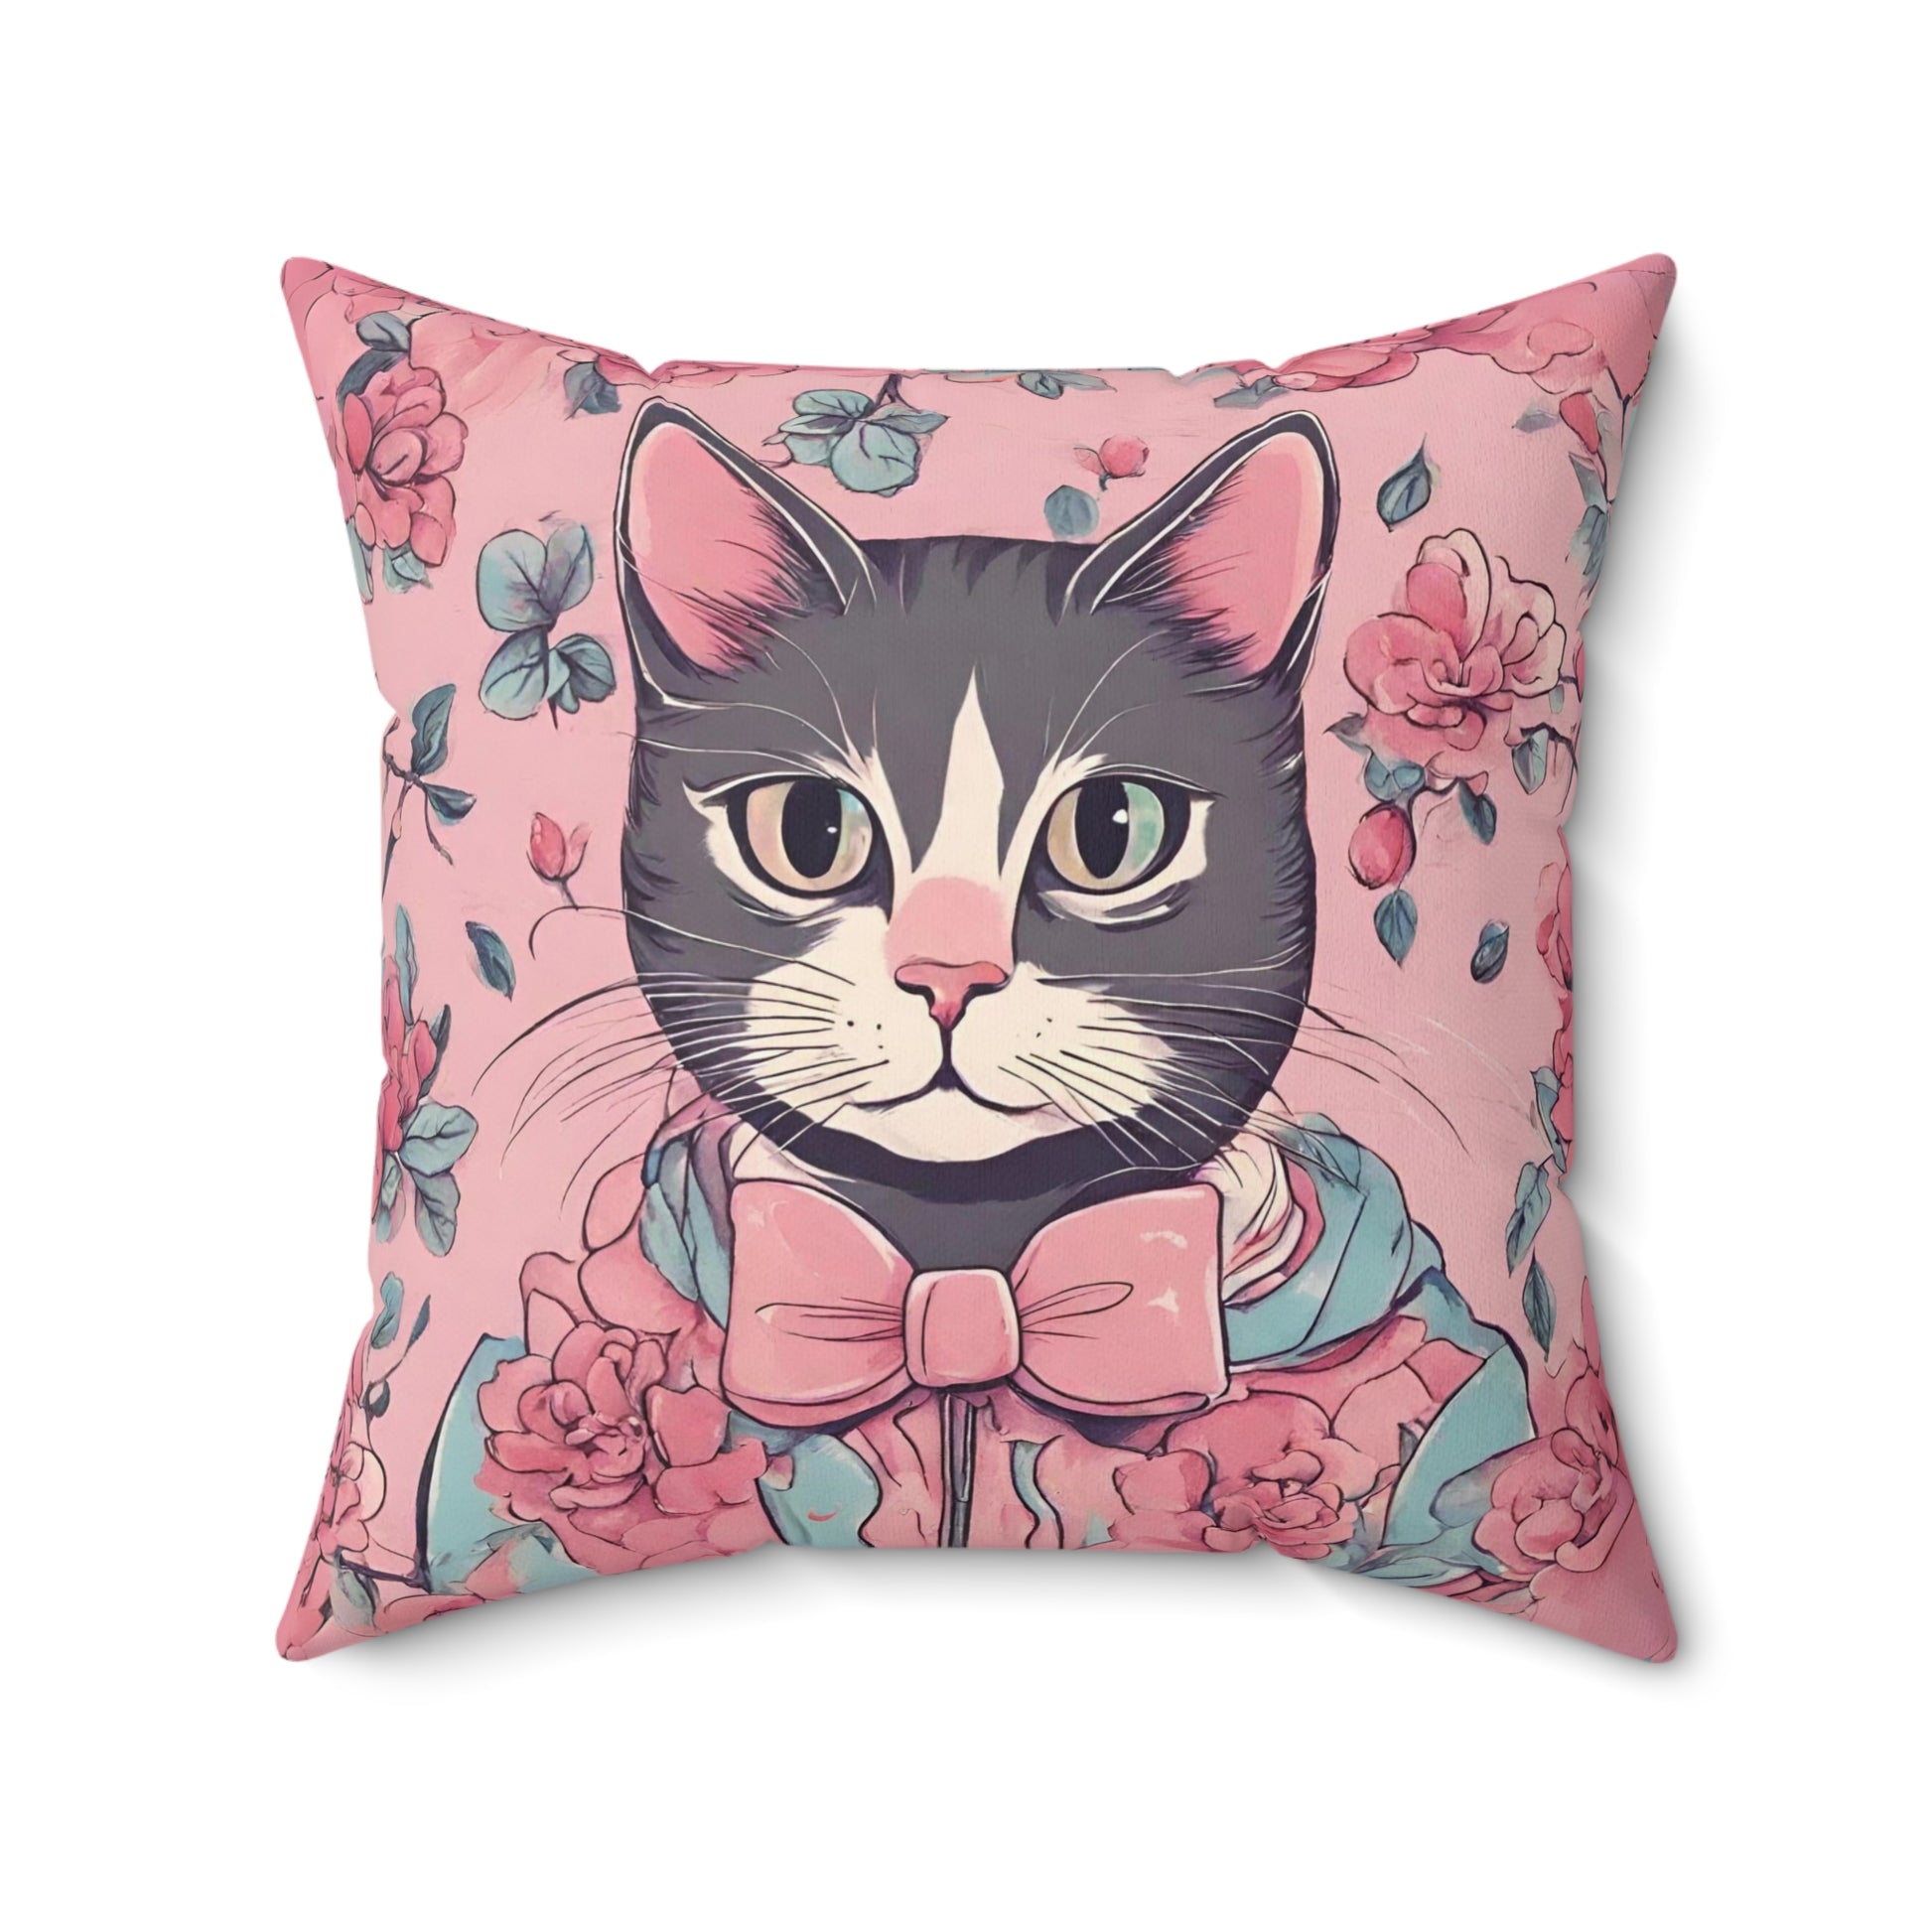 Victorian cat Pillow, Cute vintage cat Cushion, floral cat home decor, Cozy cat and flowers pillow, Decorative pillow, Cottagecore aesthetic